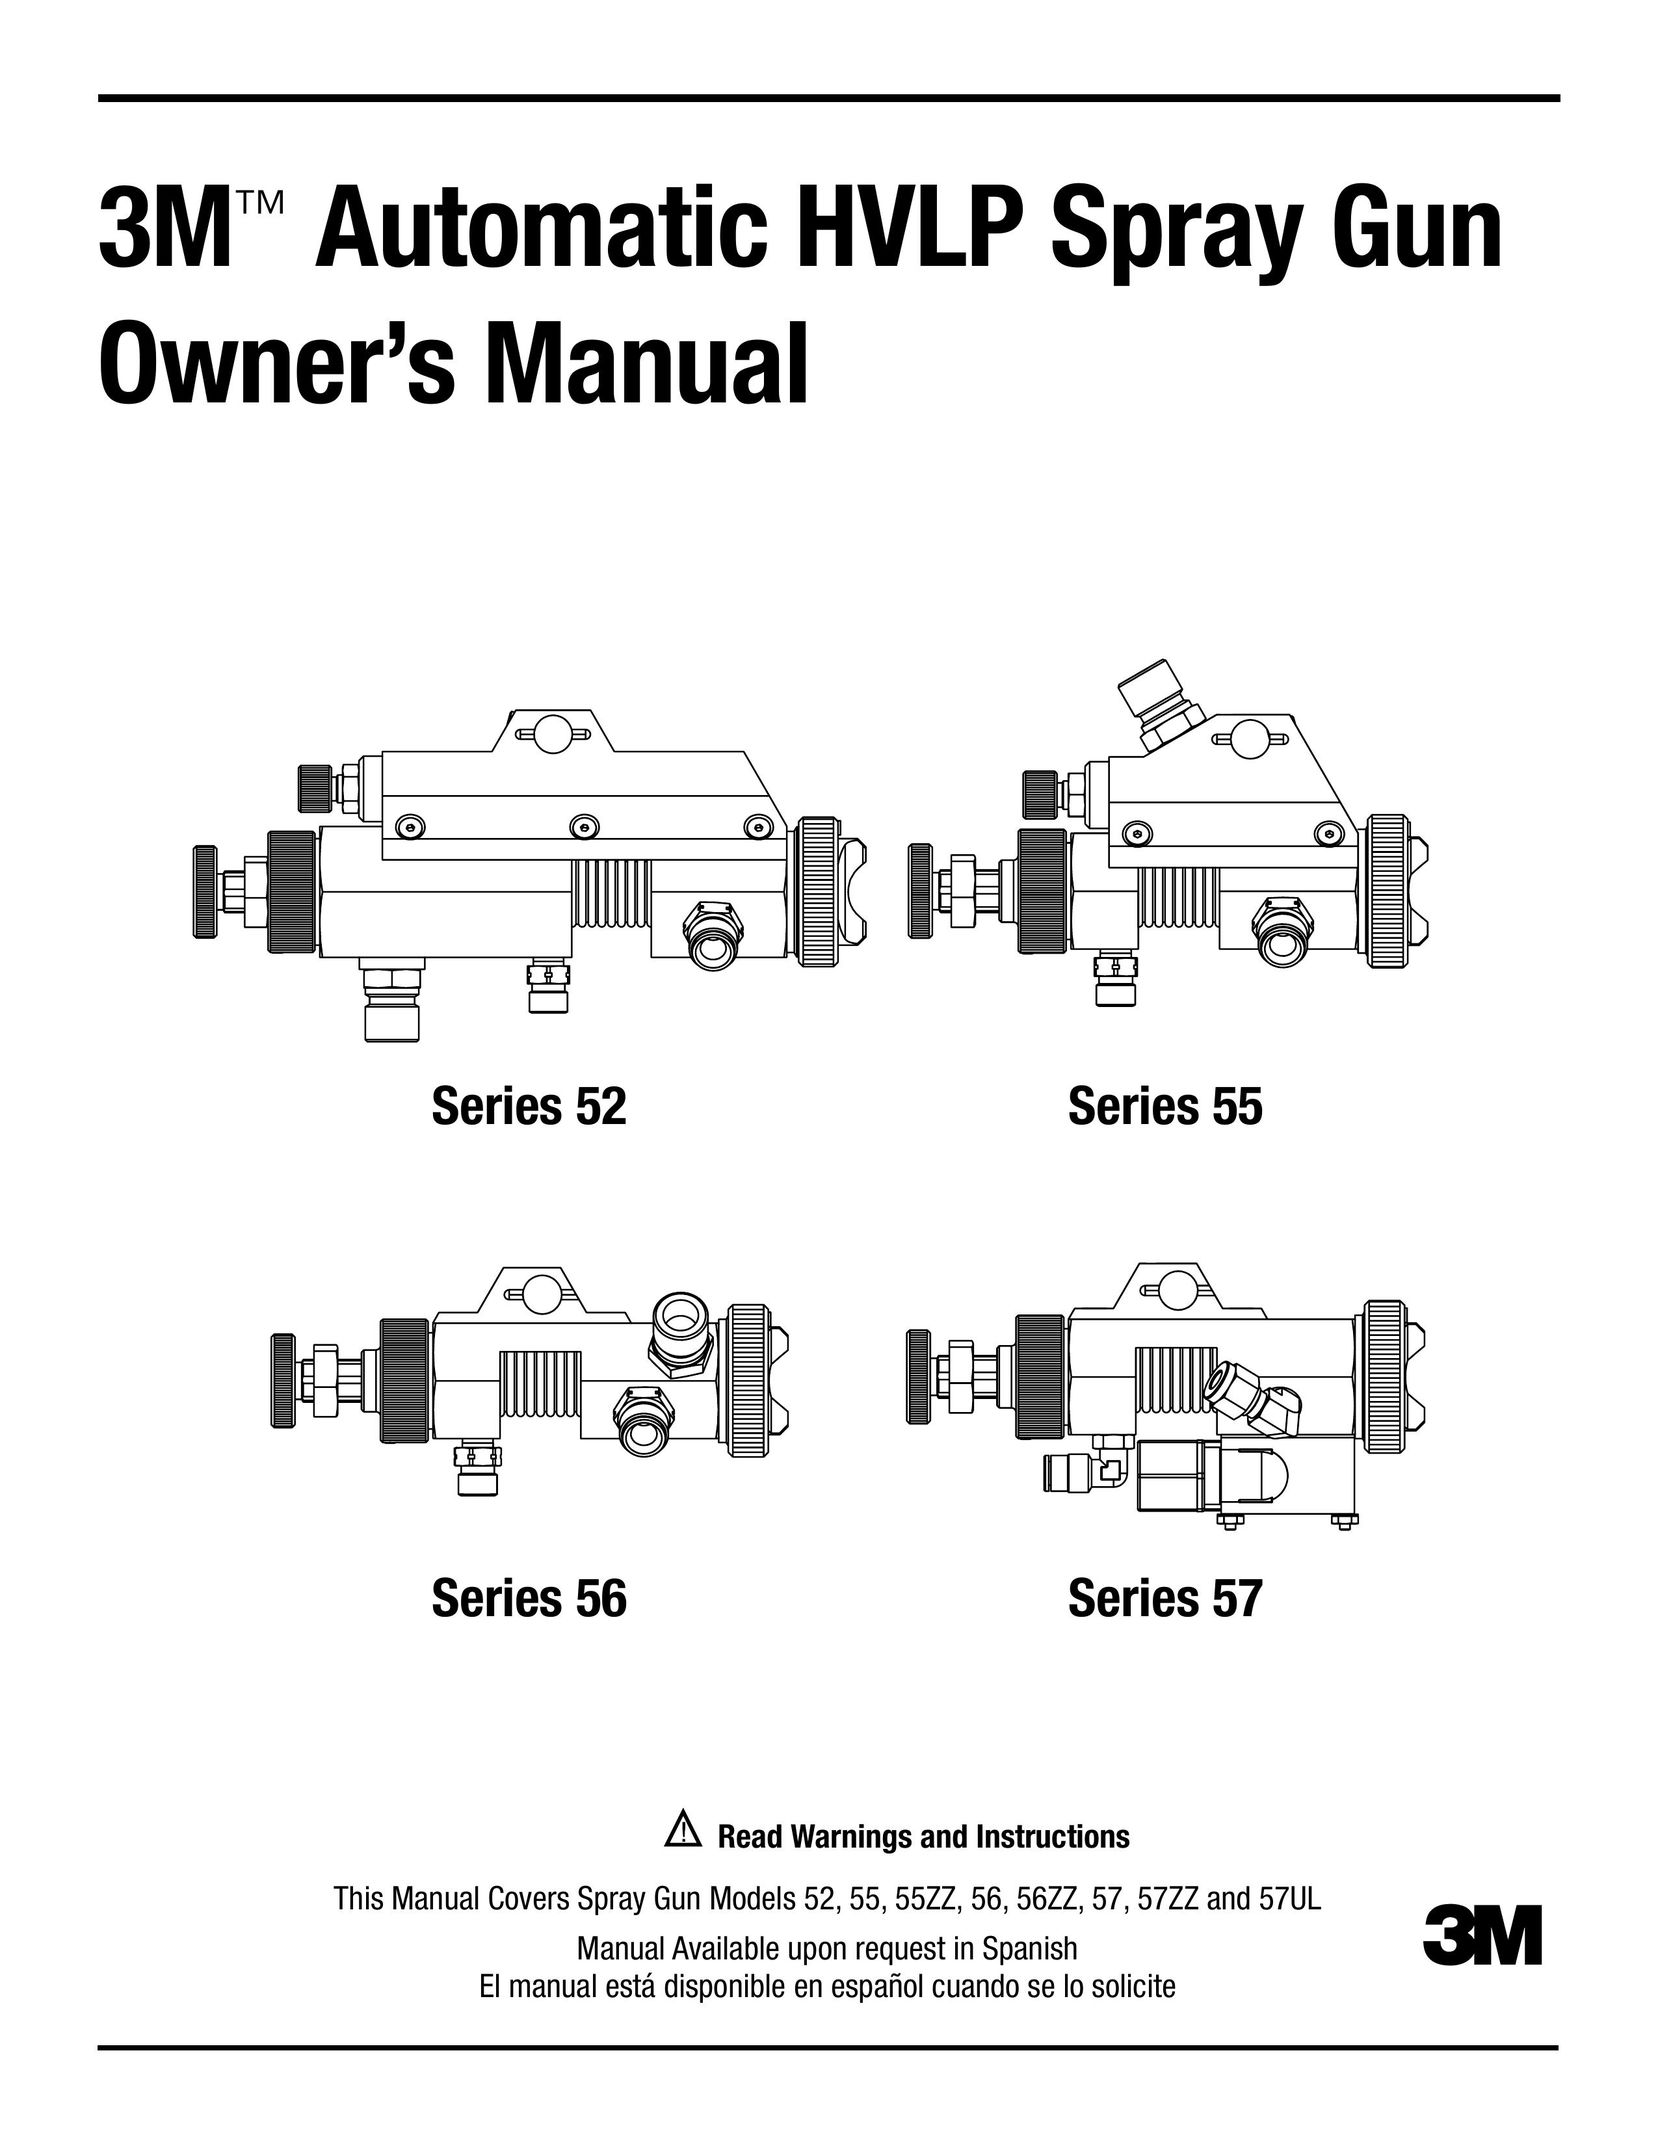 3M Series 57 Paint Sprayer User Manual